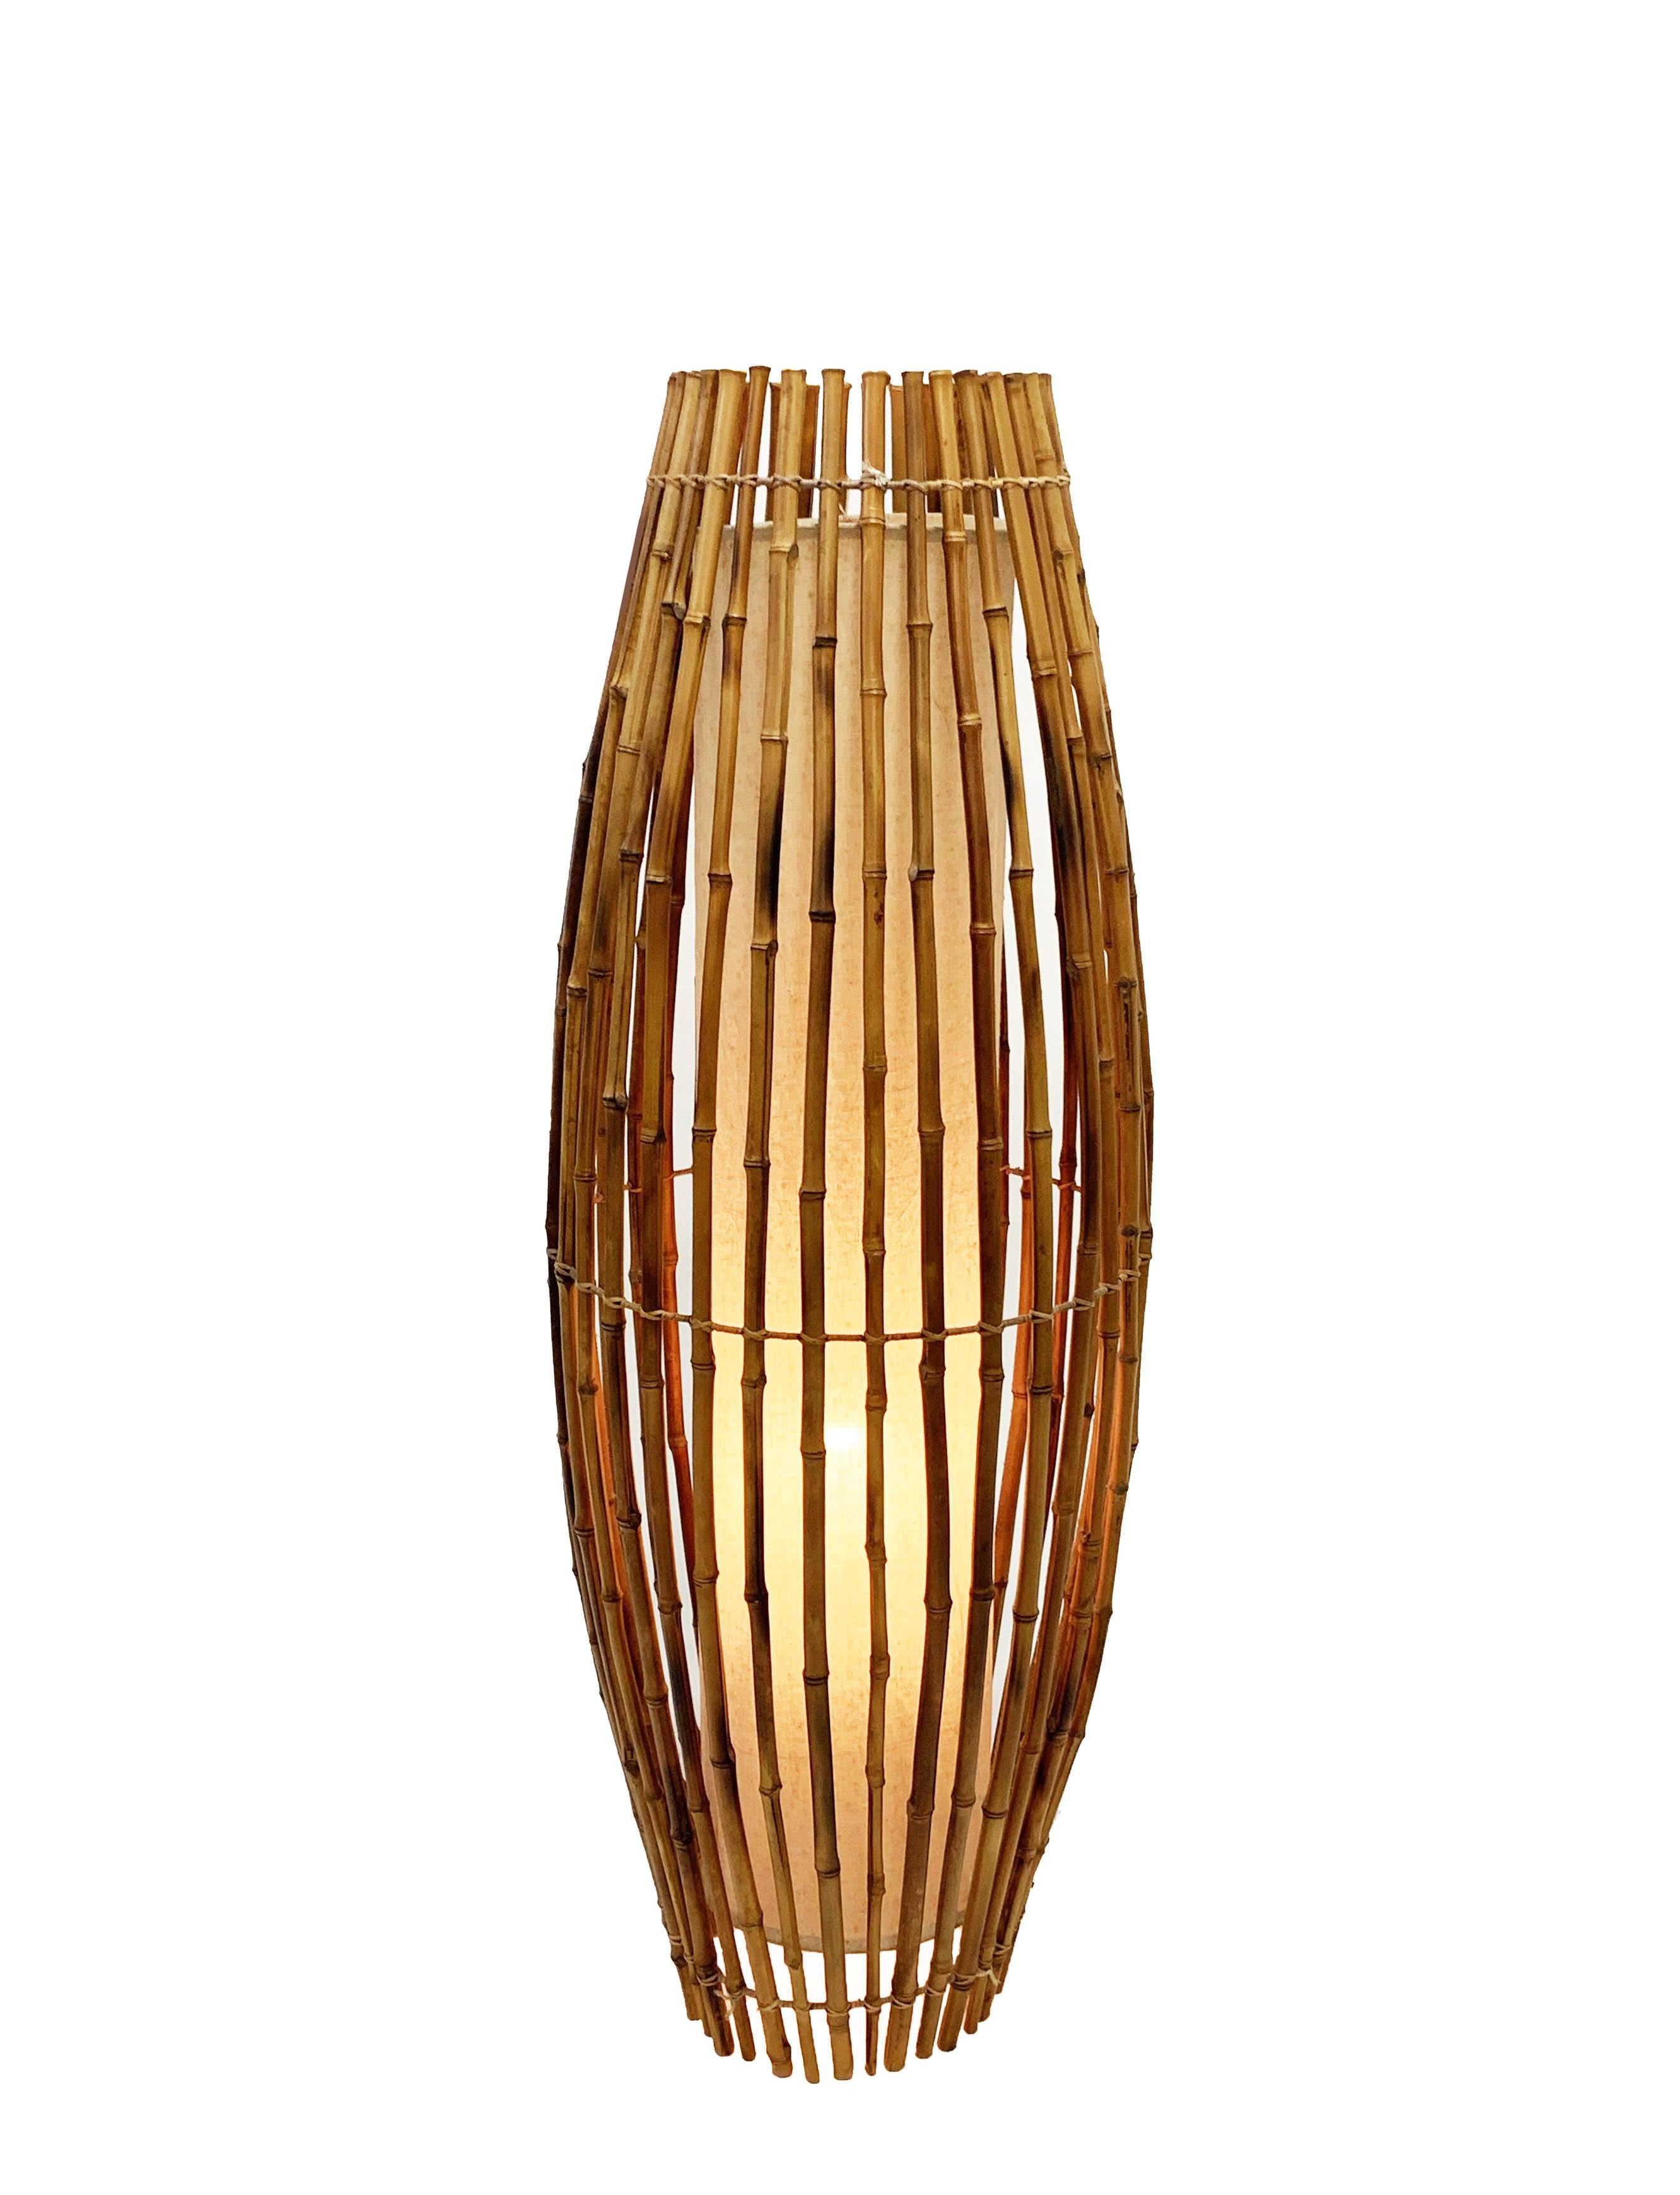 Midcentury Bamboo and Rattan Italian Floor Lamp after Franco Albini, 1960s 3